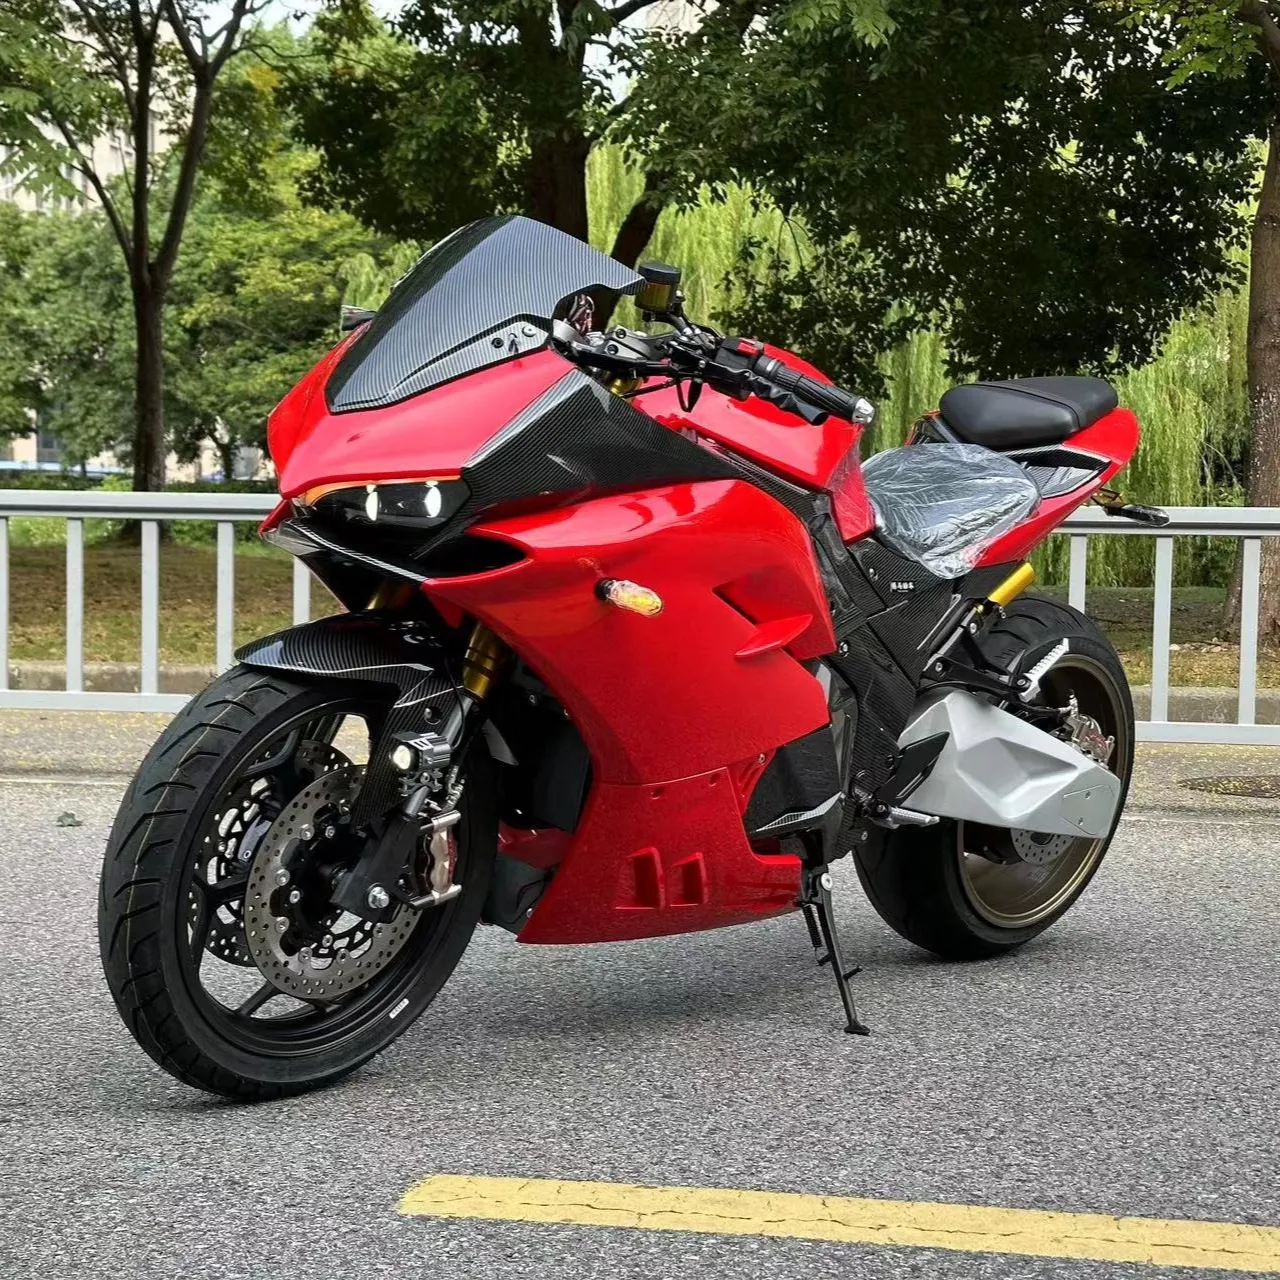 Ducati panigale Электрический мотоцикл с литиевой батареей большой дальности